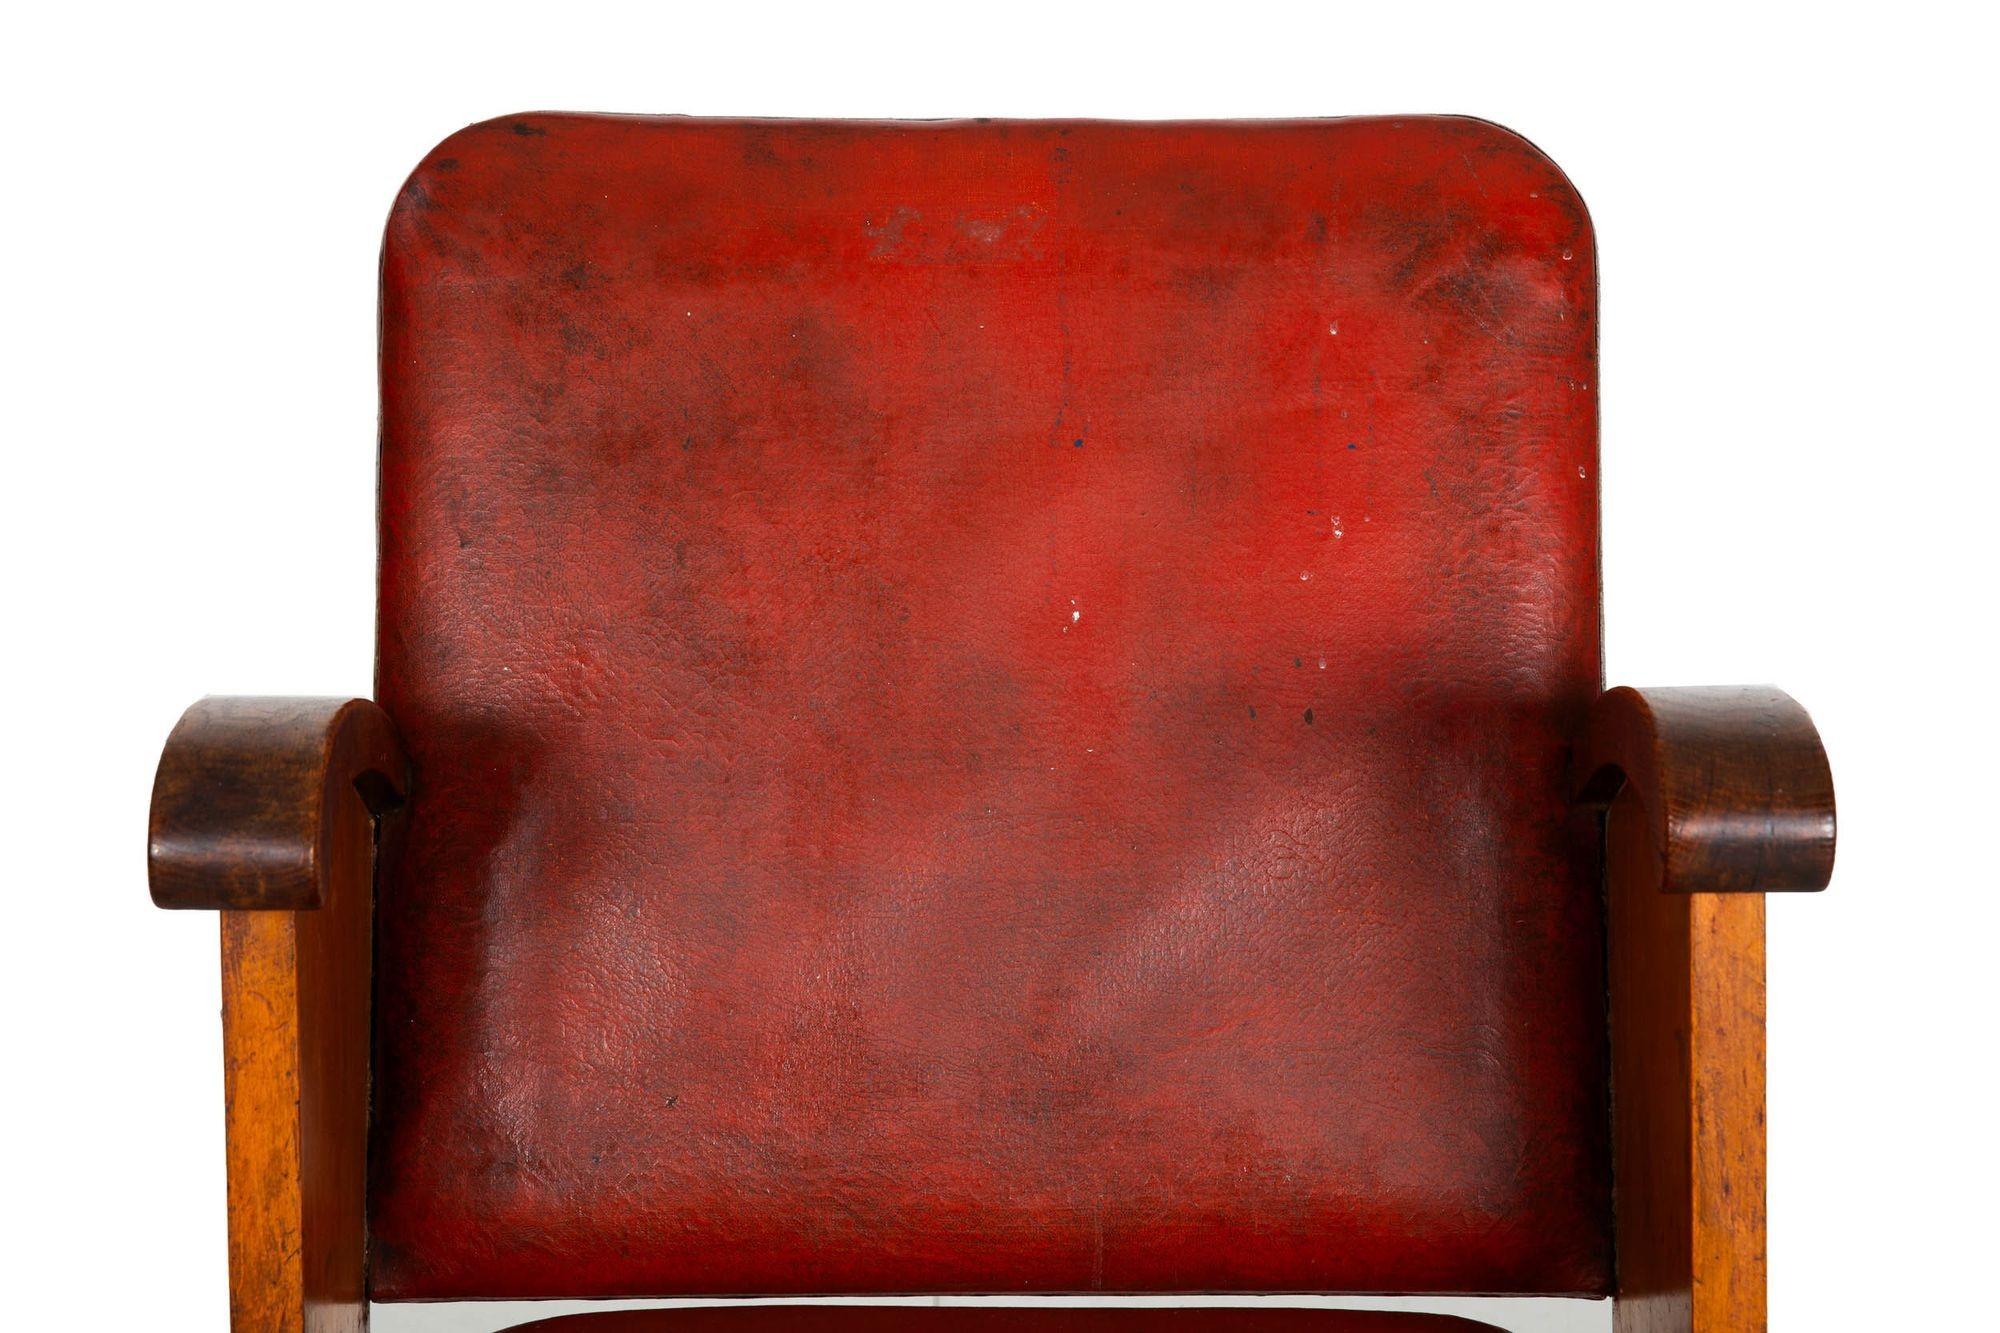 Steel Rare Vintage Danish Modern Cinema Theater Arm Chair circa 1950